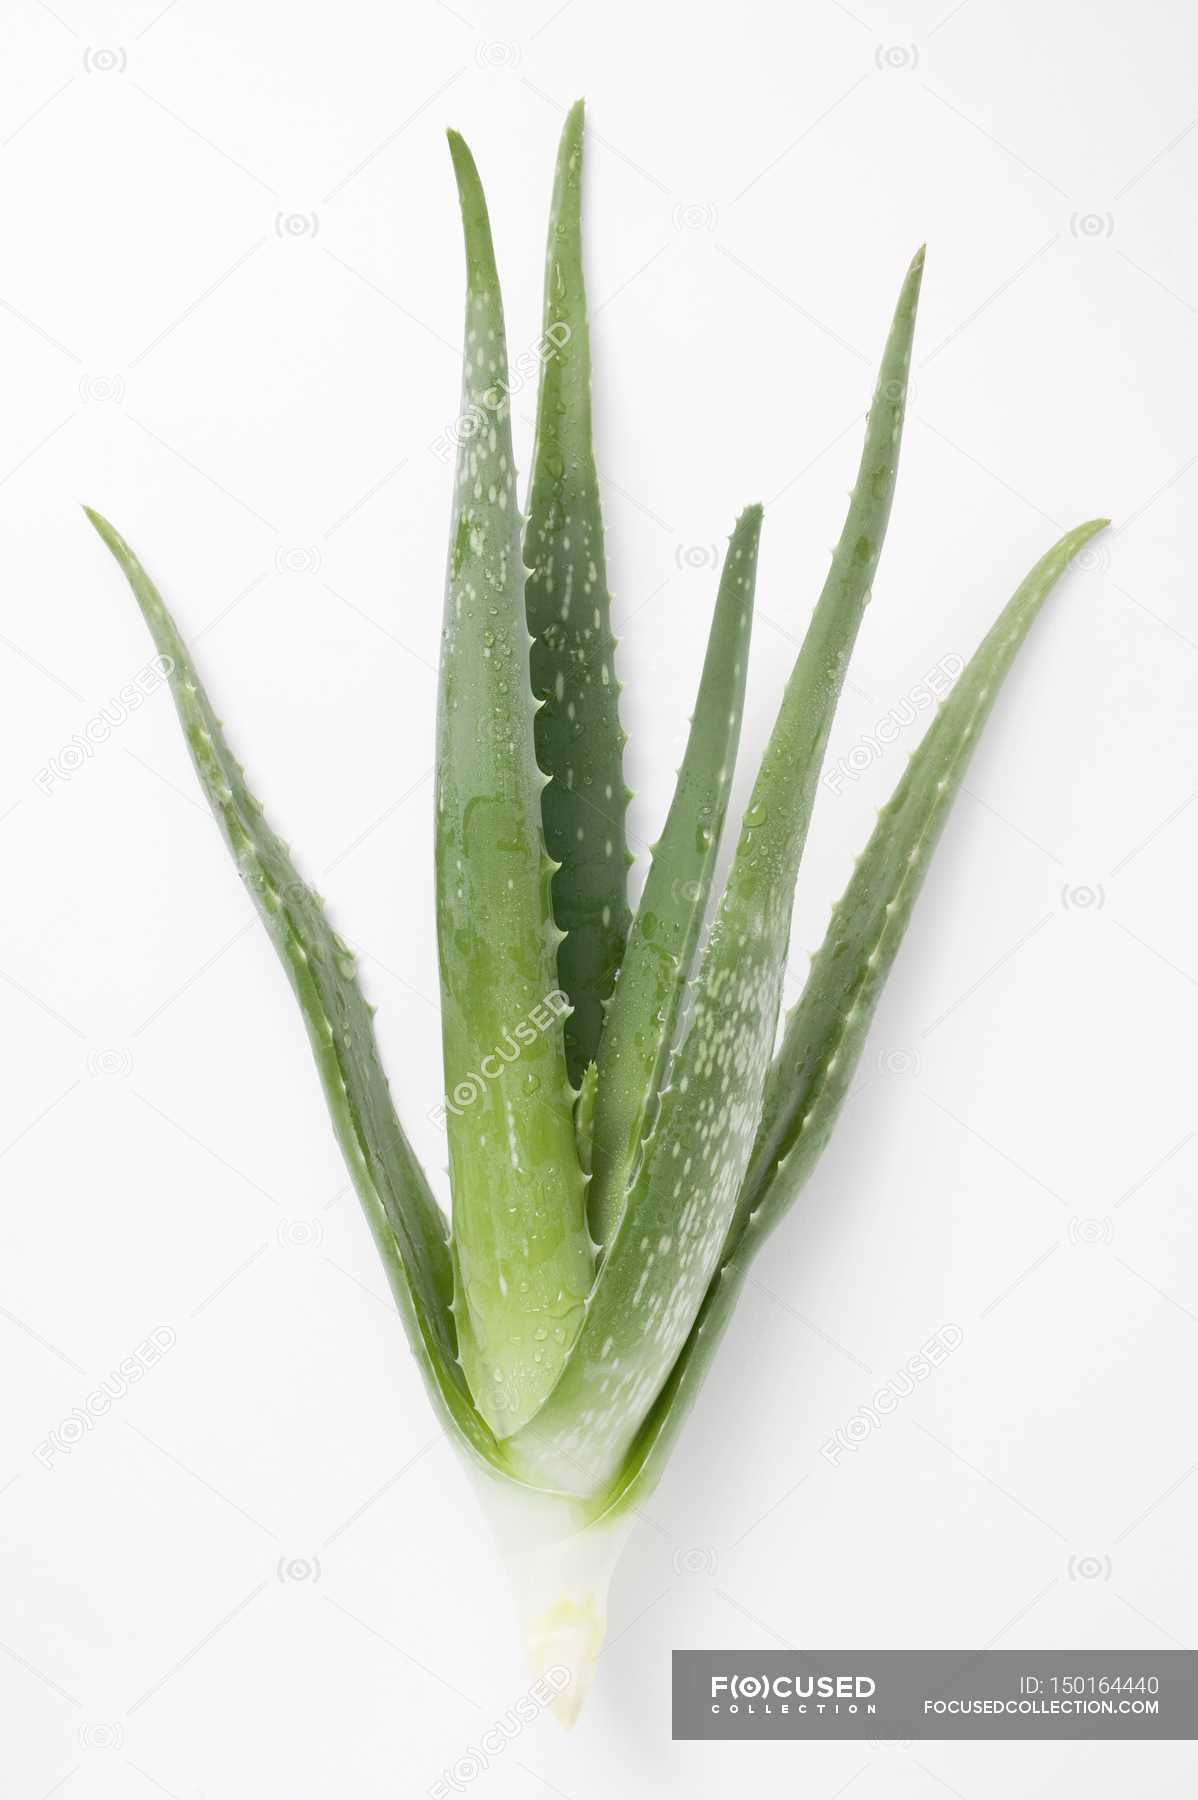 Aloe vera on white background — serene, decorative - Stock Photo |  #150164440